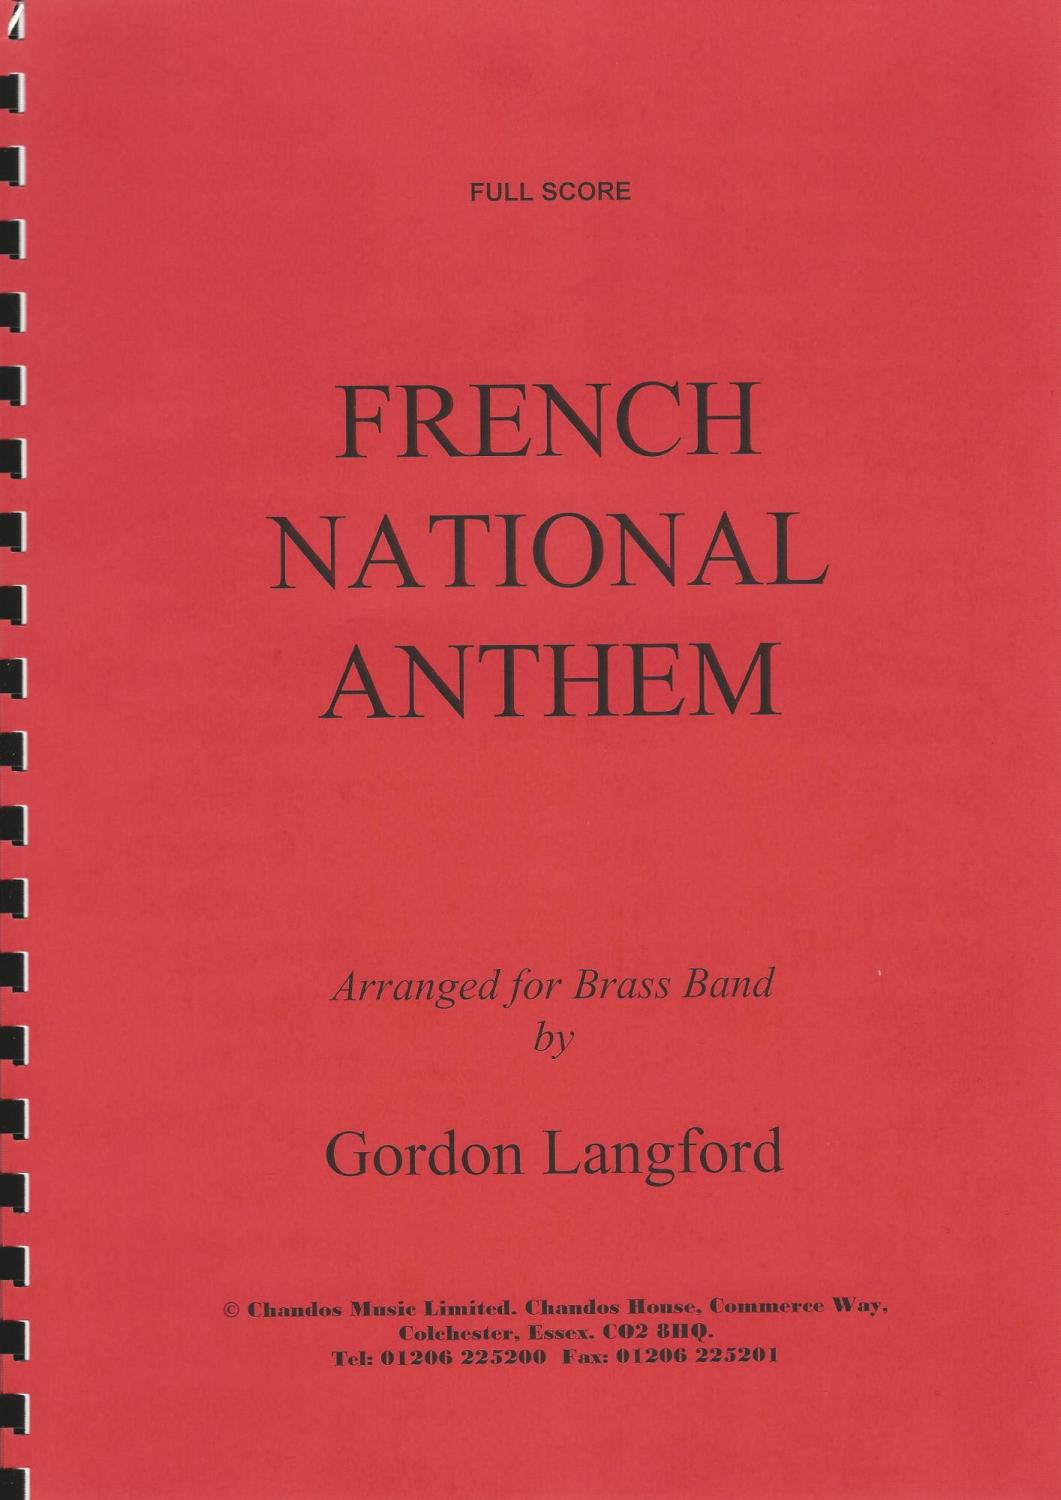 French National Anthem for Brass Band - Gordon Langford